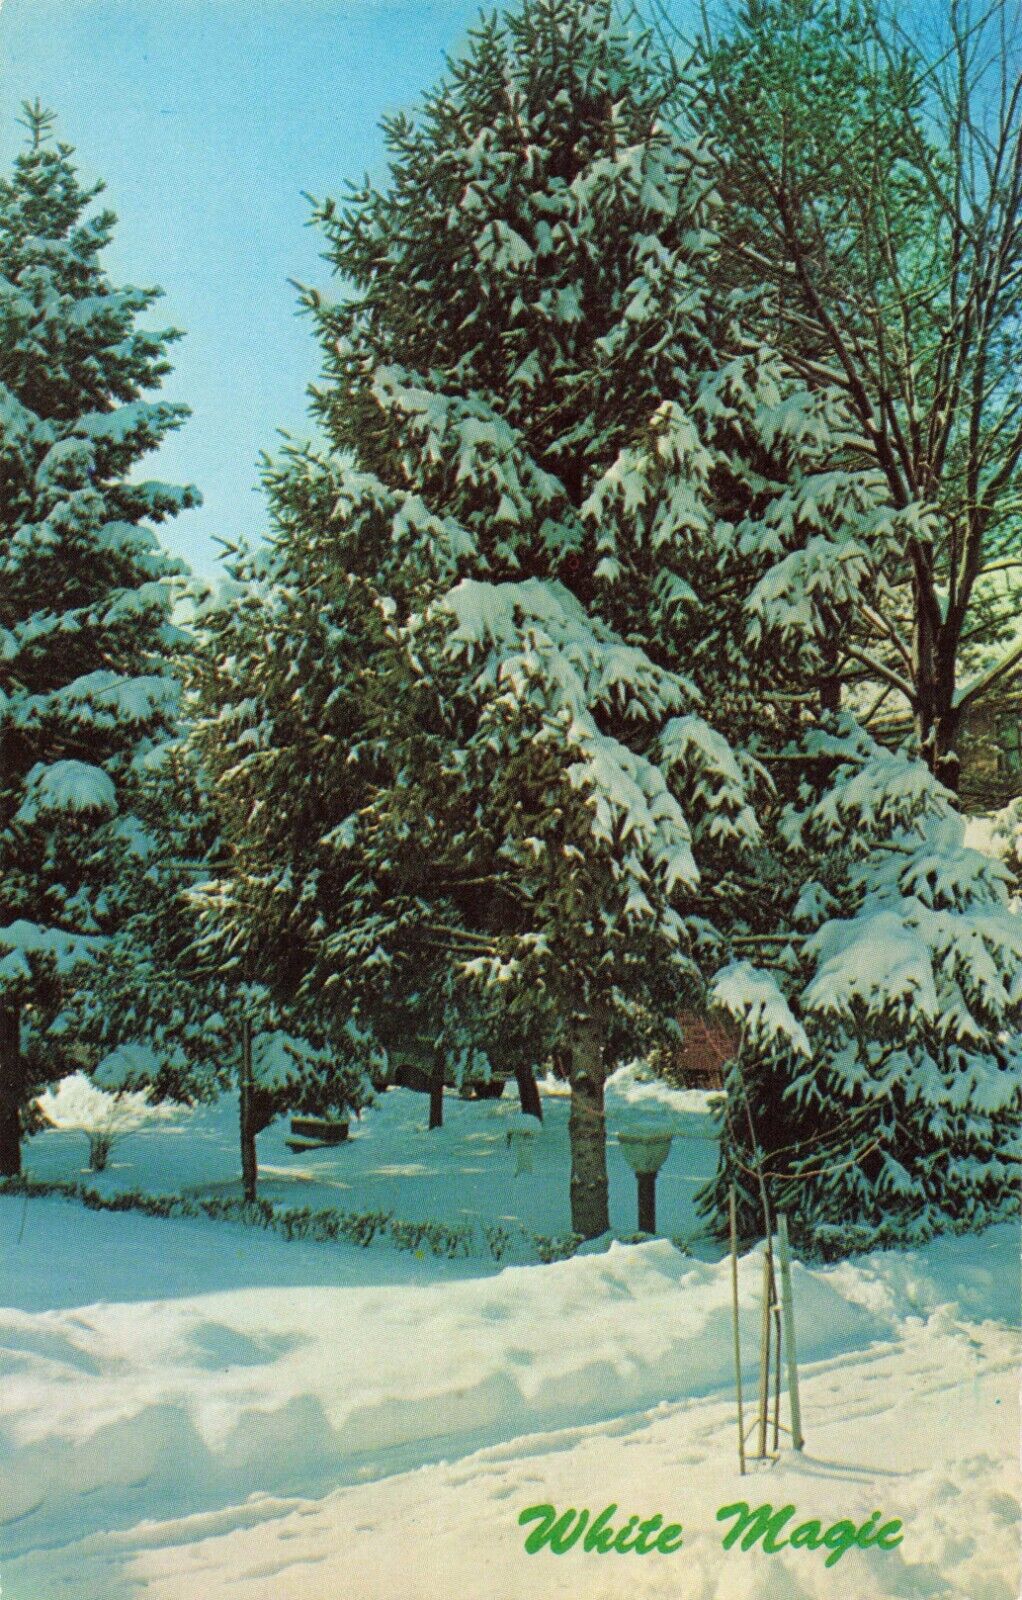 Manchester NH New Hampshire, White Magic Snowy Winter Scene, Vintage Postcard